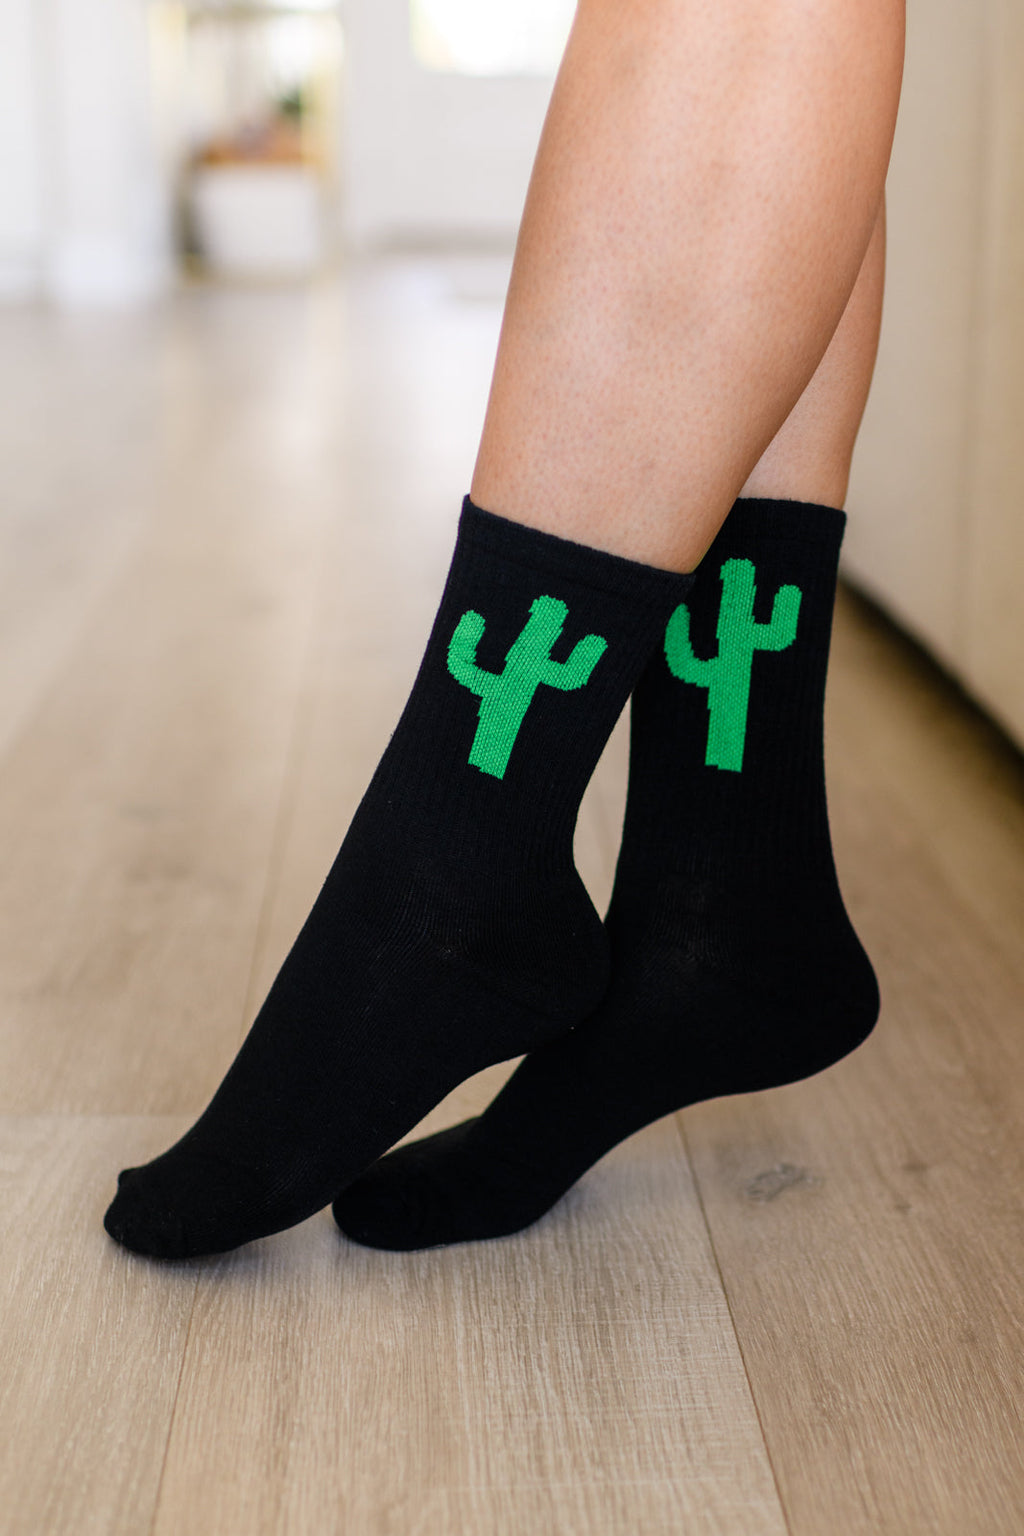 Sweet Socks in Cactus Print